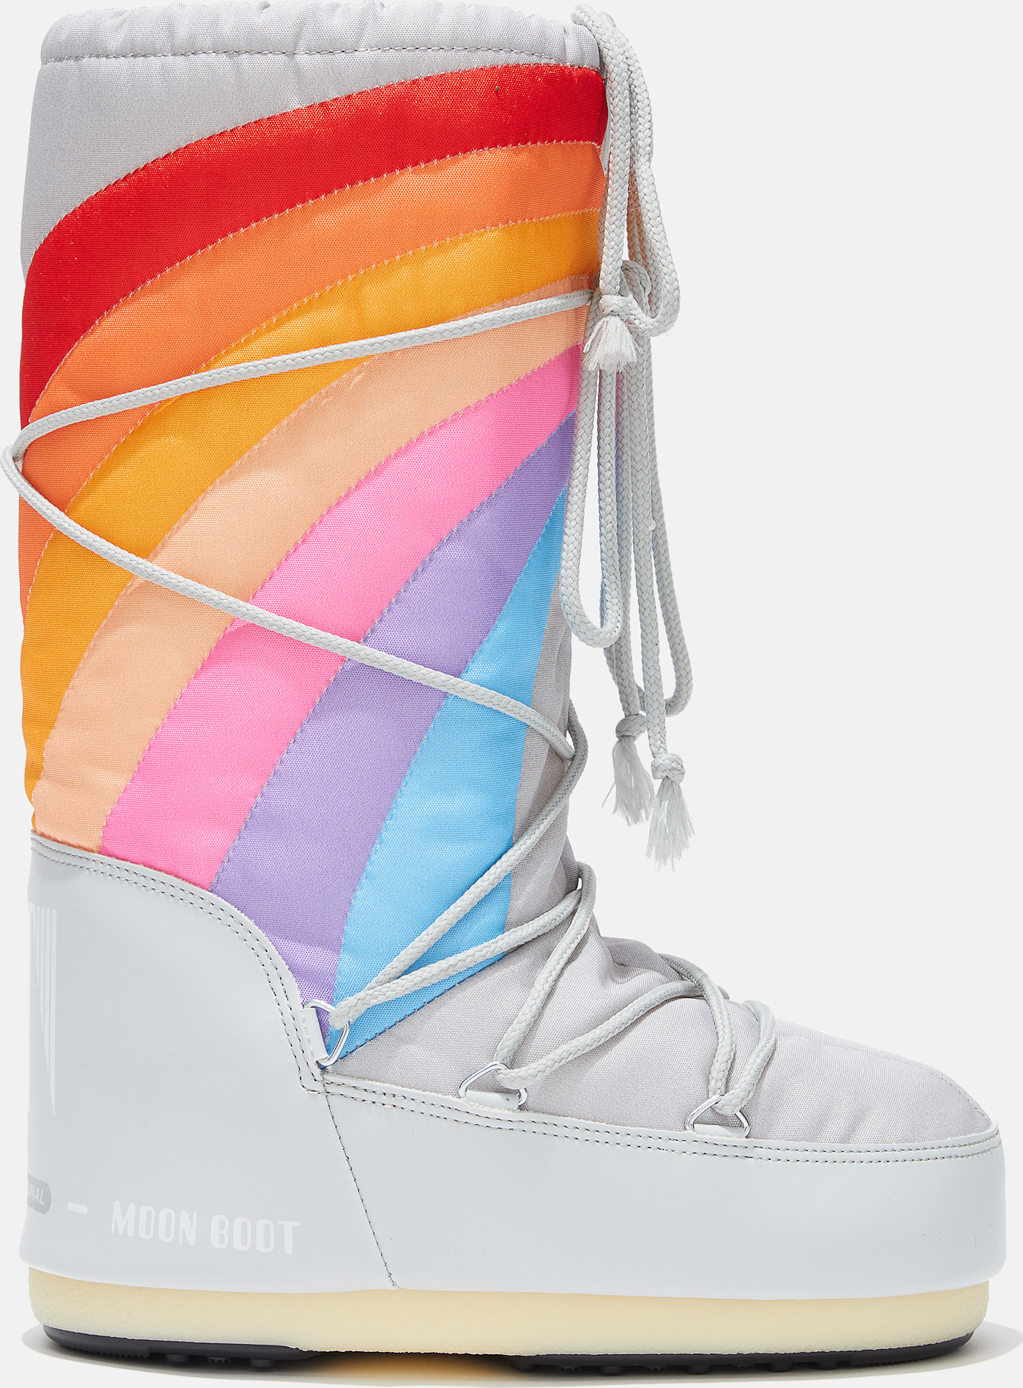 Zimní boty MOON BOOT Icon rainbow duhové Velikost: EU 31/34